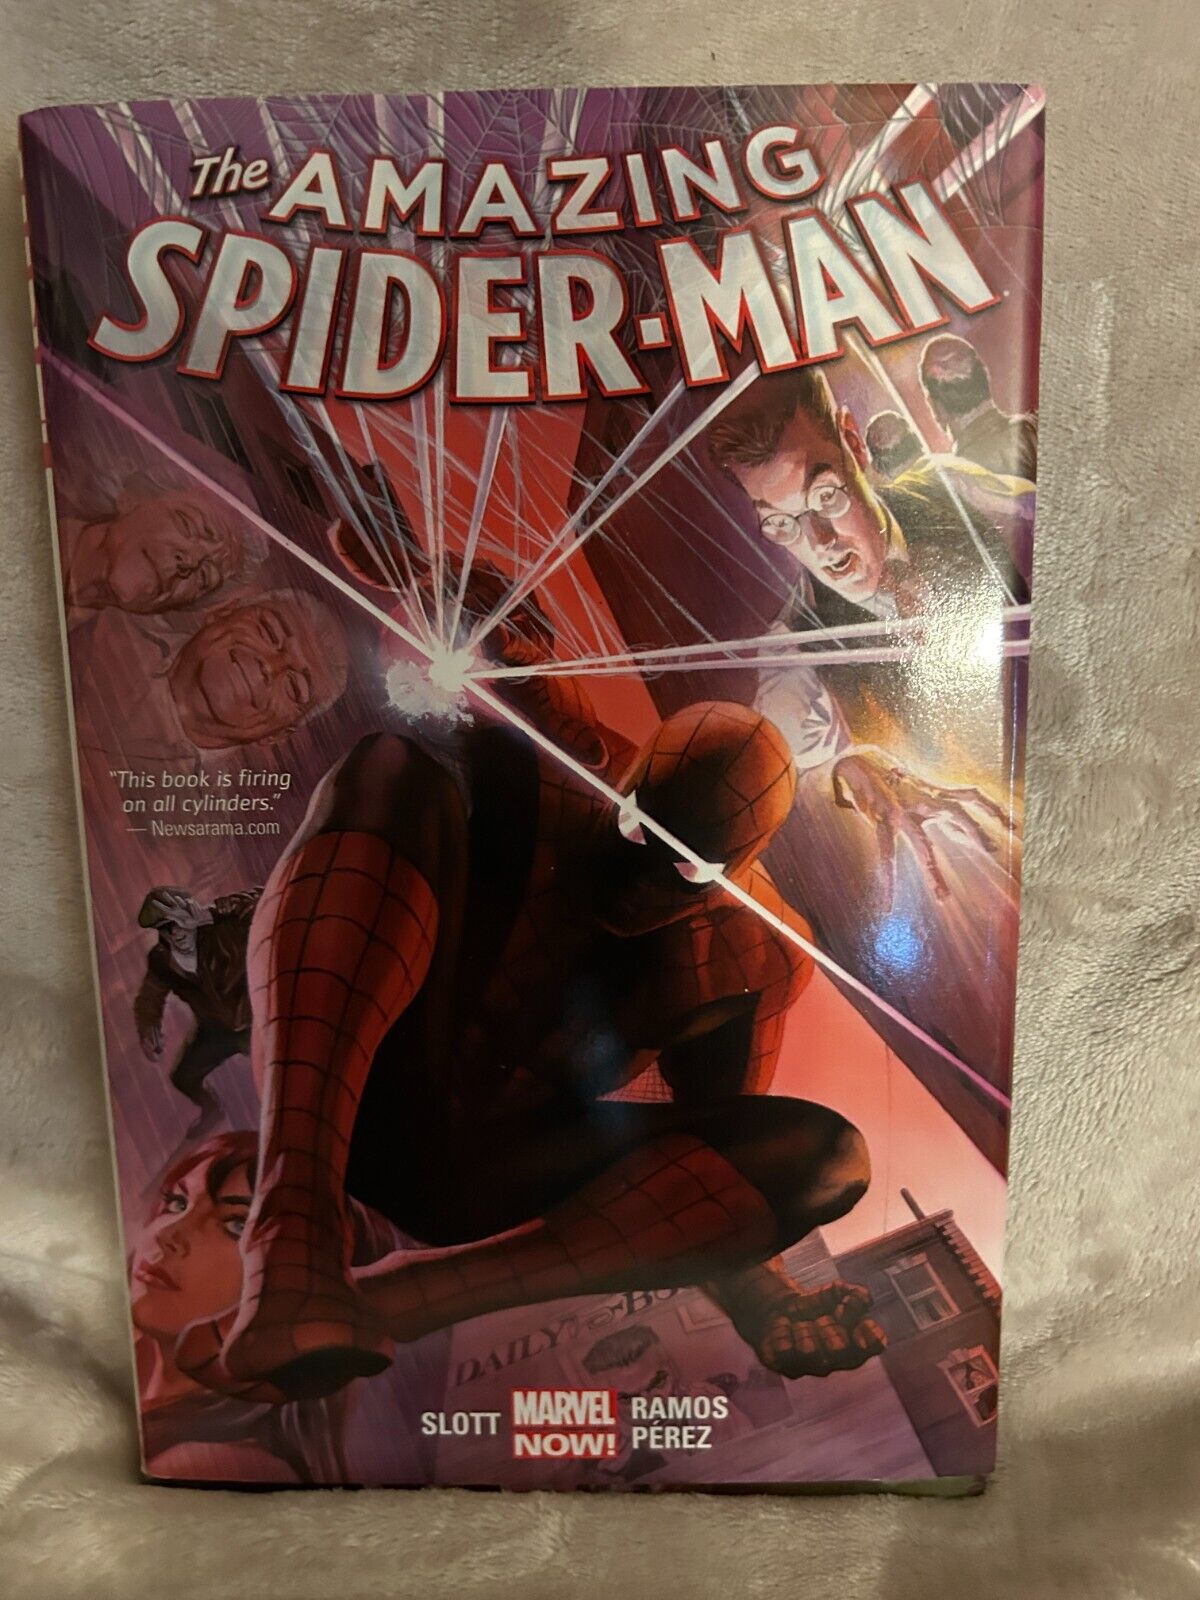 The Amazing Spider-Man Vol. 1 (2016, Hardcover) Dan Slott Marvel Comics